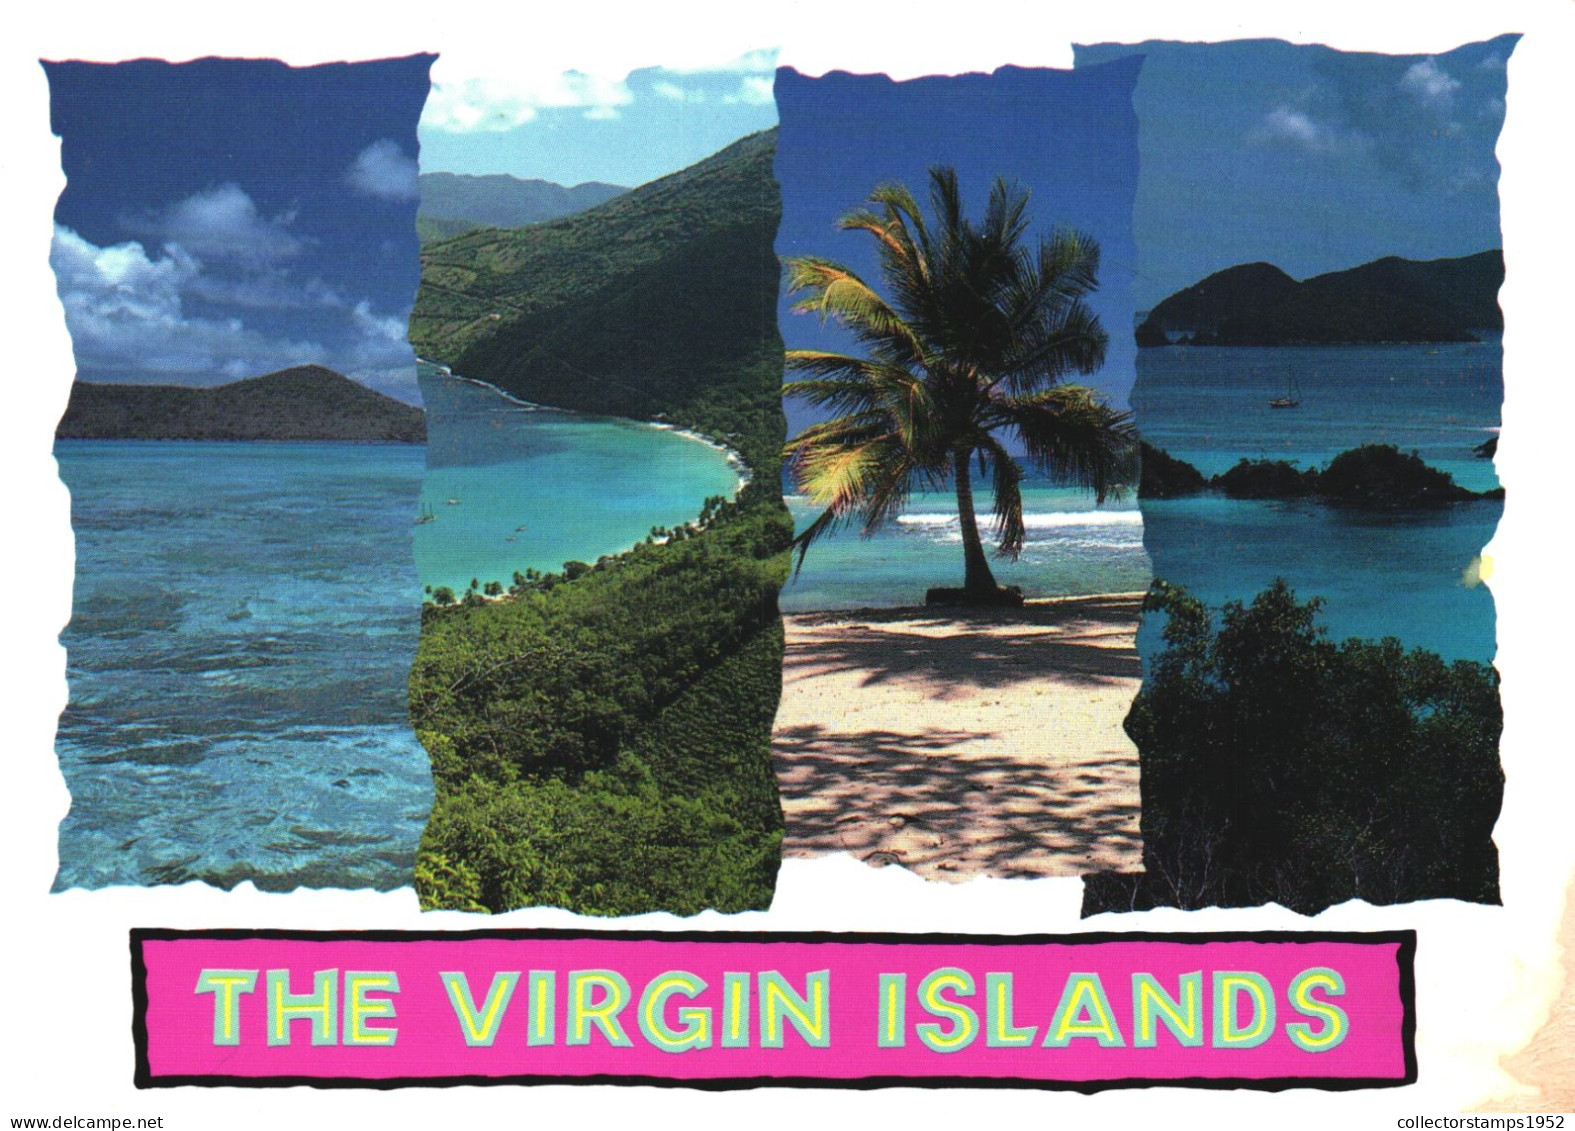 VIRGIN ISLANDS, MULTIPLE VIEWS, COAST, CARIBBEAN SEA, ANTILLES - Jungferninseln, Britische